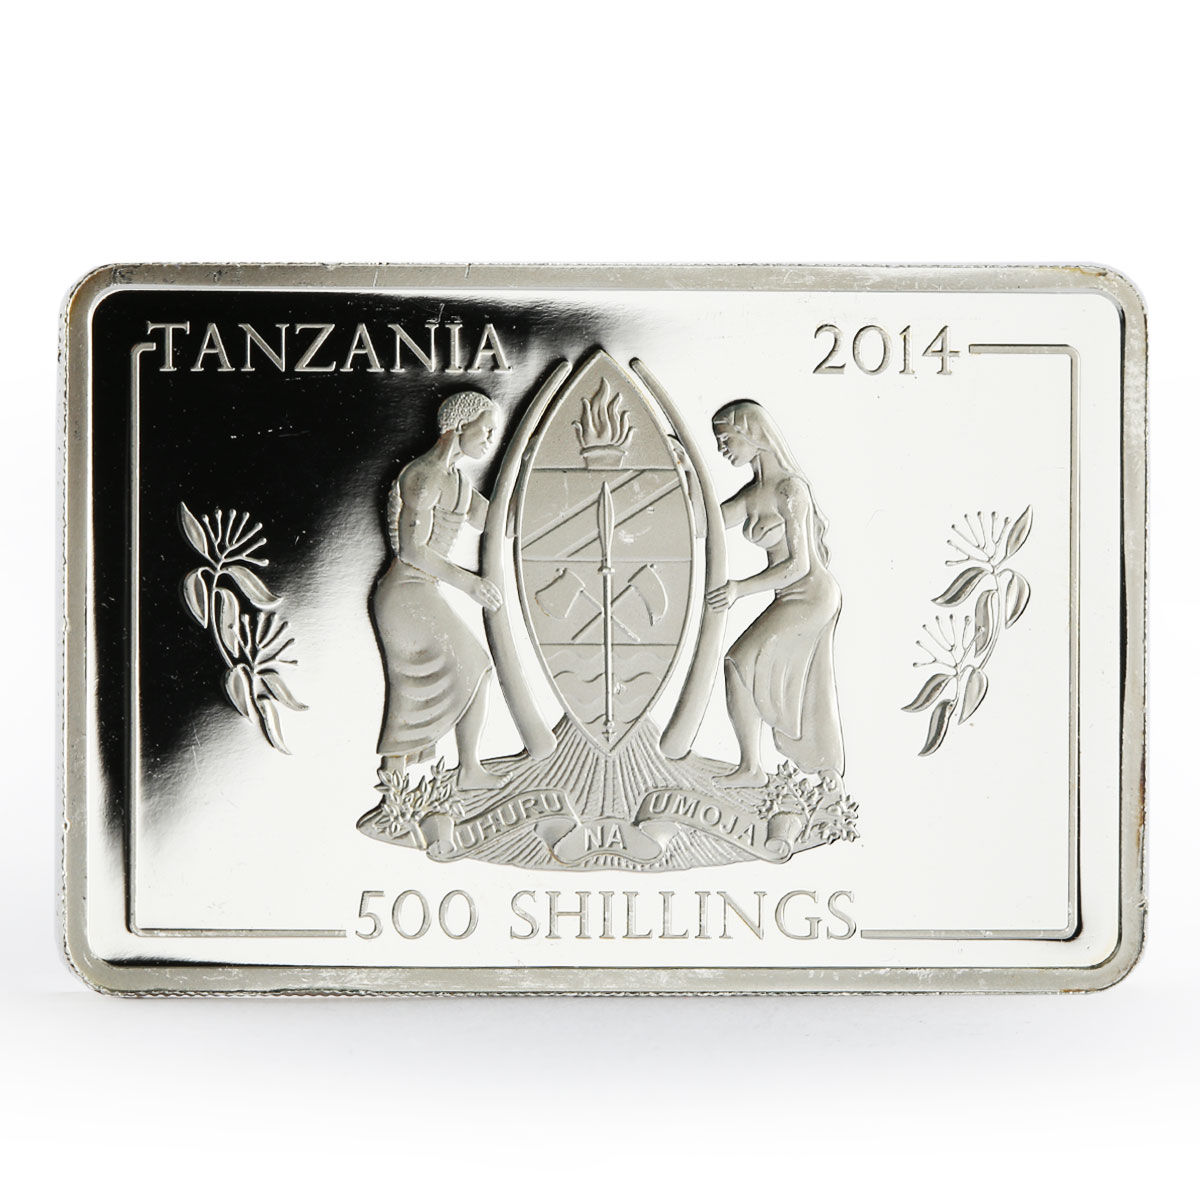 Tanzania 500 shillings Navy Flagships series HMS Bulwark proof silver coin 2014